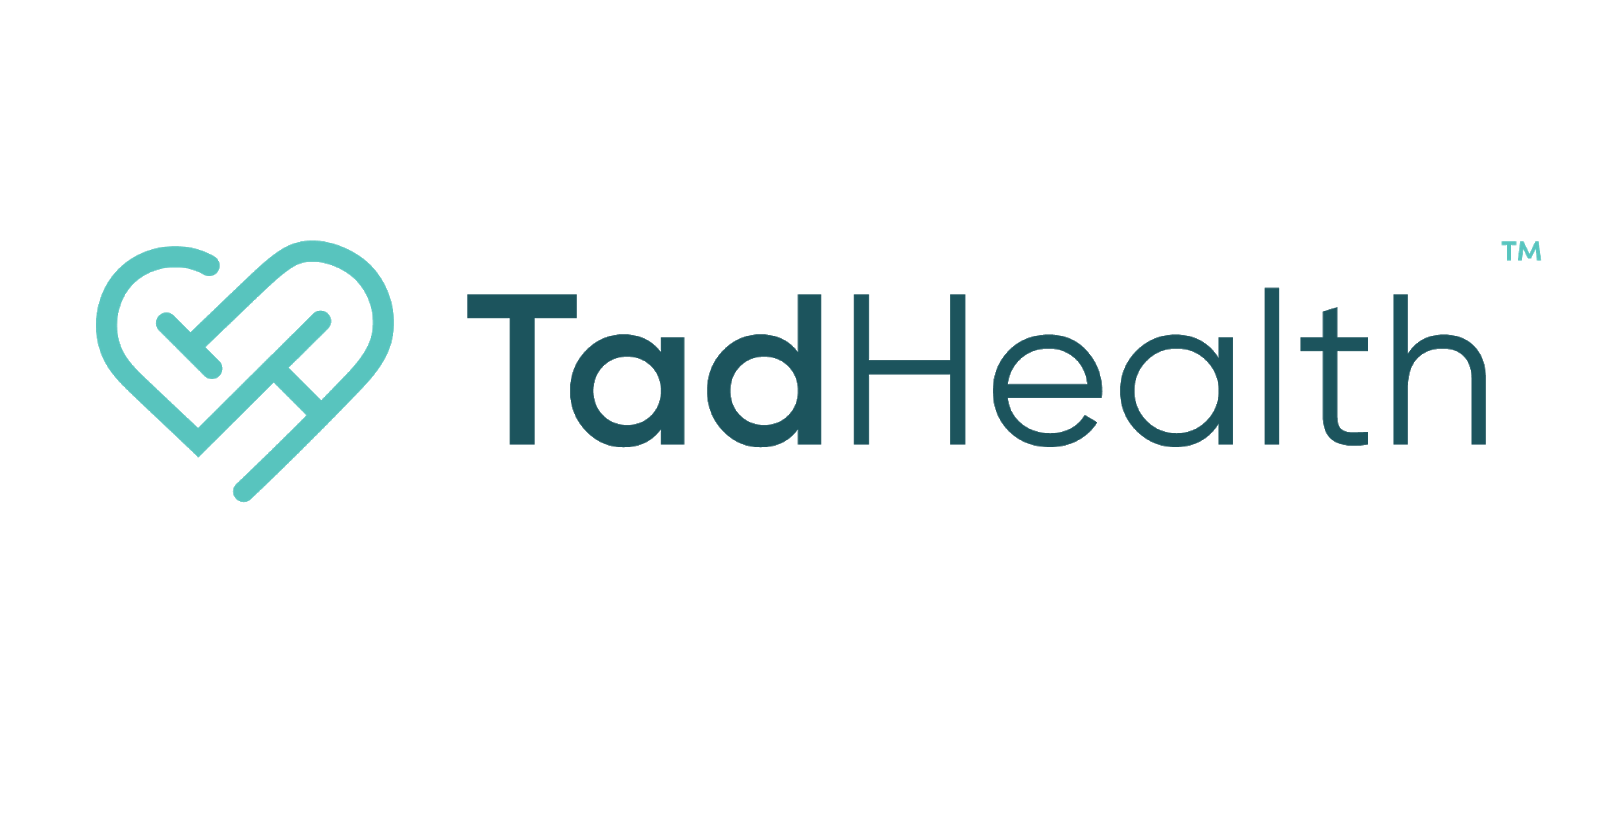 tadhealth_logo